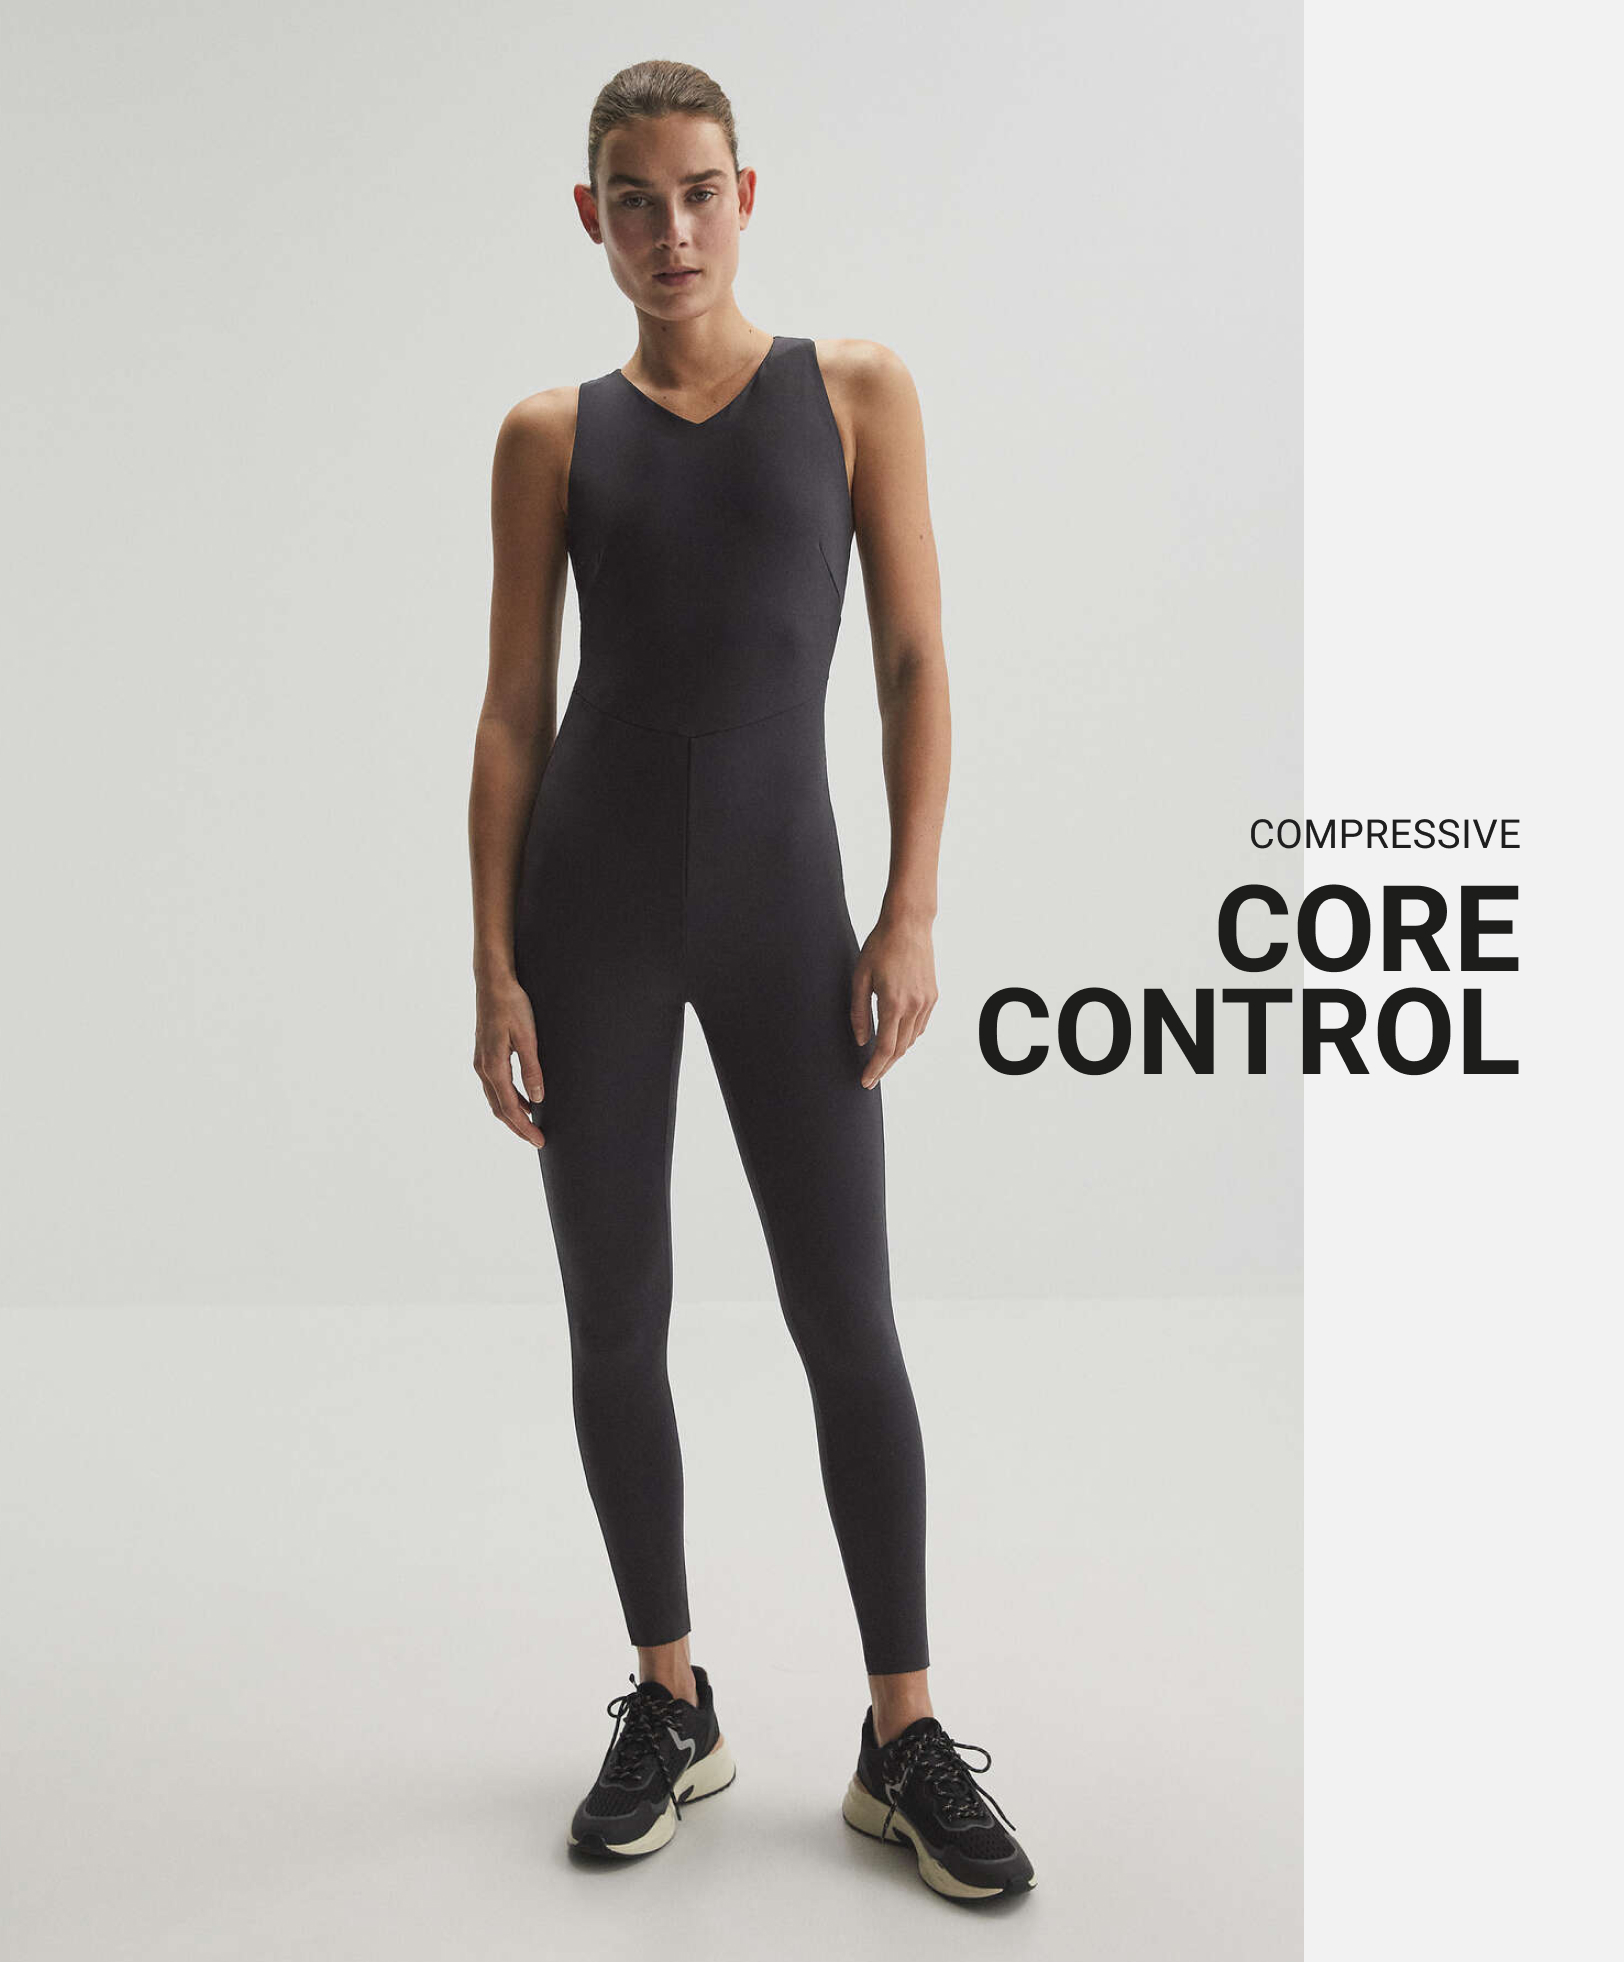 Compressive core control jumpsuit